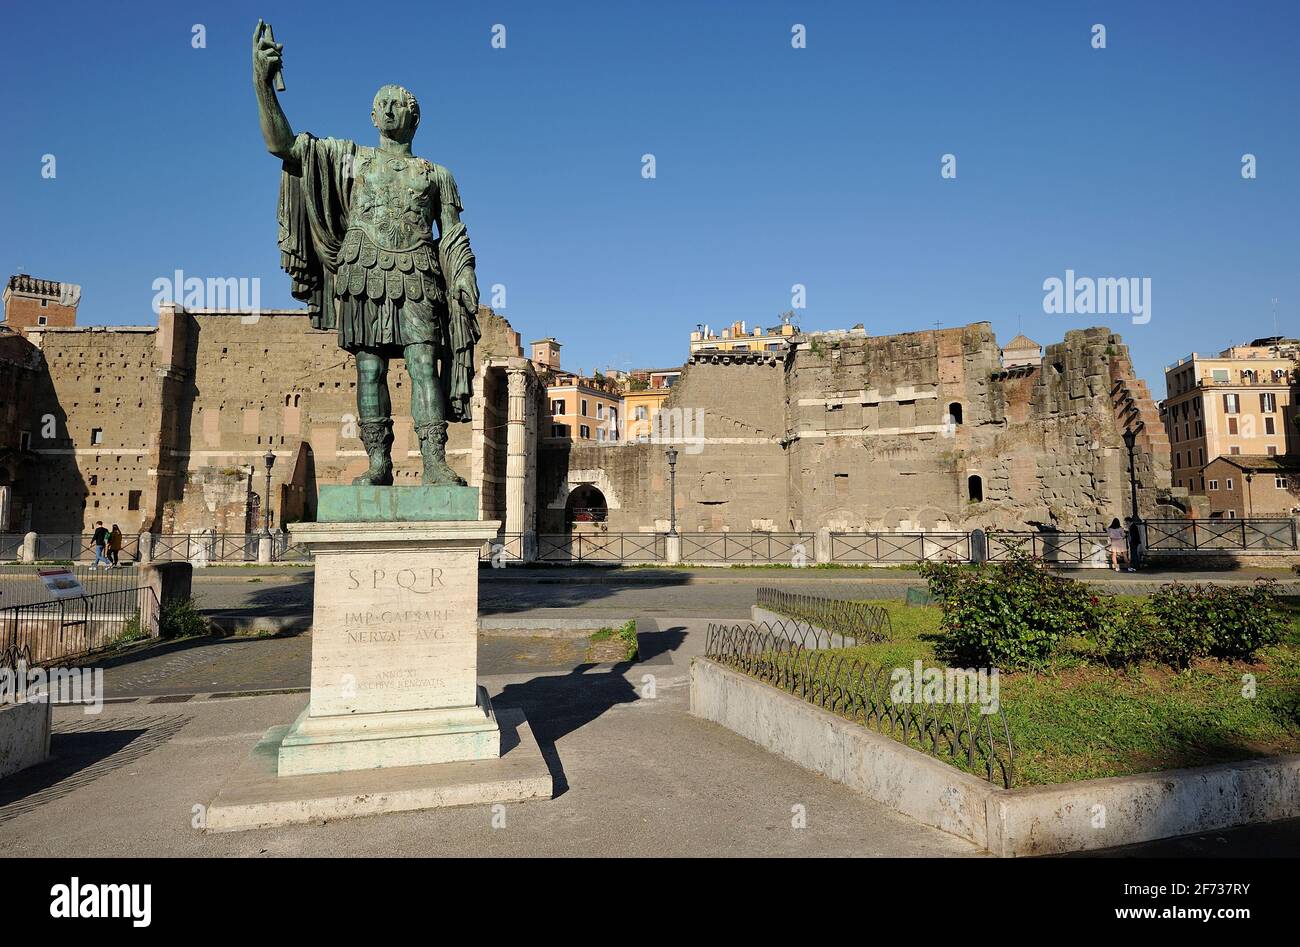 Italie, Rome, statue en bronze de l'empereur romain Nerva Banque D'Images